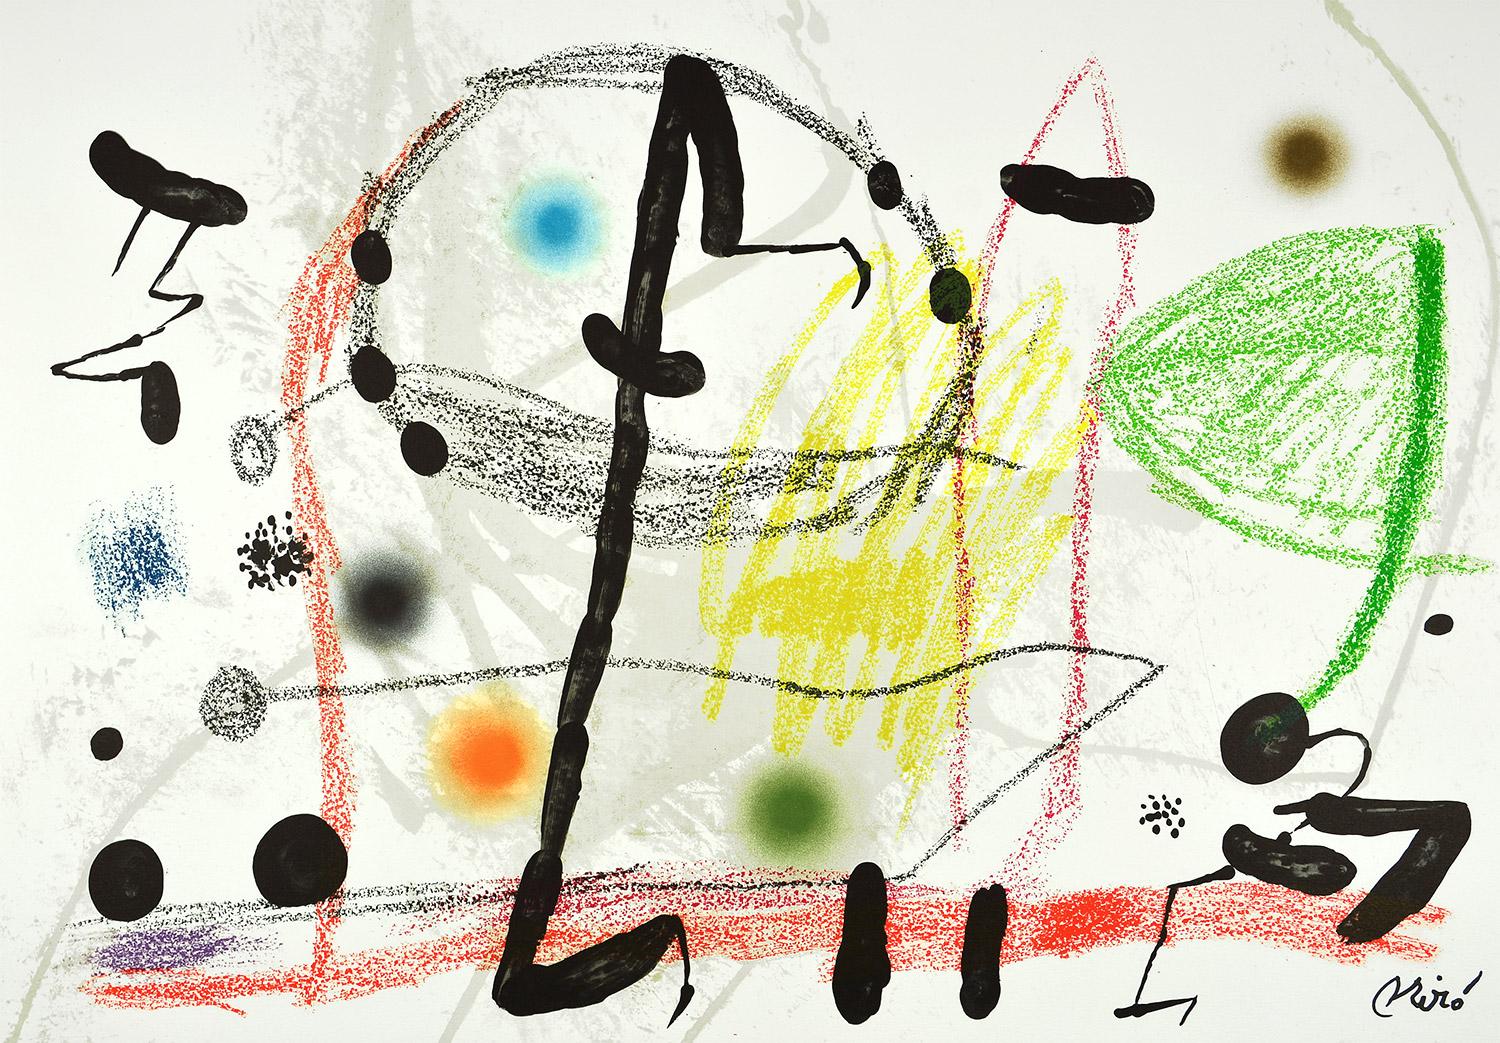 Joan Miró - Maravillas con variaciones acrósticas en el jardín de Mir�ó XIII
Date of creation: 1975
Medium: Lithograph on Gvarro paper
Edition: 1500
Size: 49,5 x 71 cm
Condition: In very good conditions and never framed
Observations:
Lithograph on